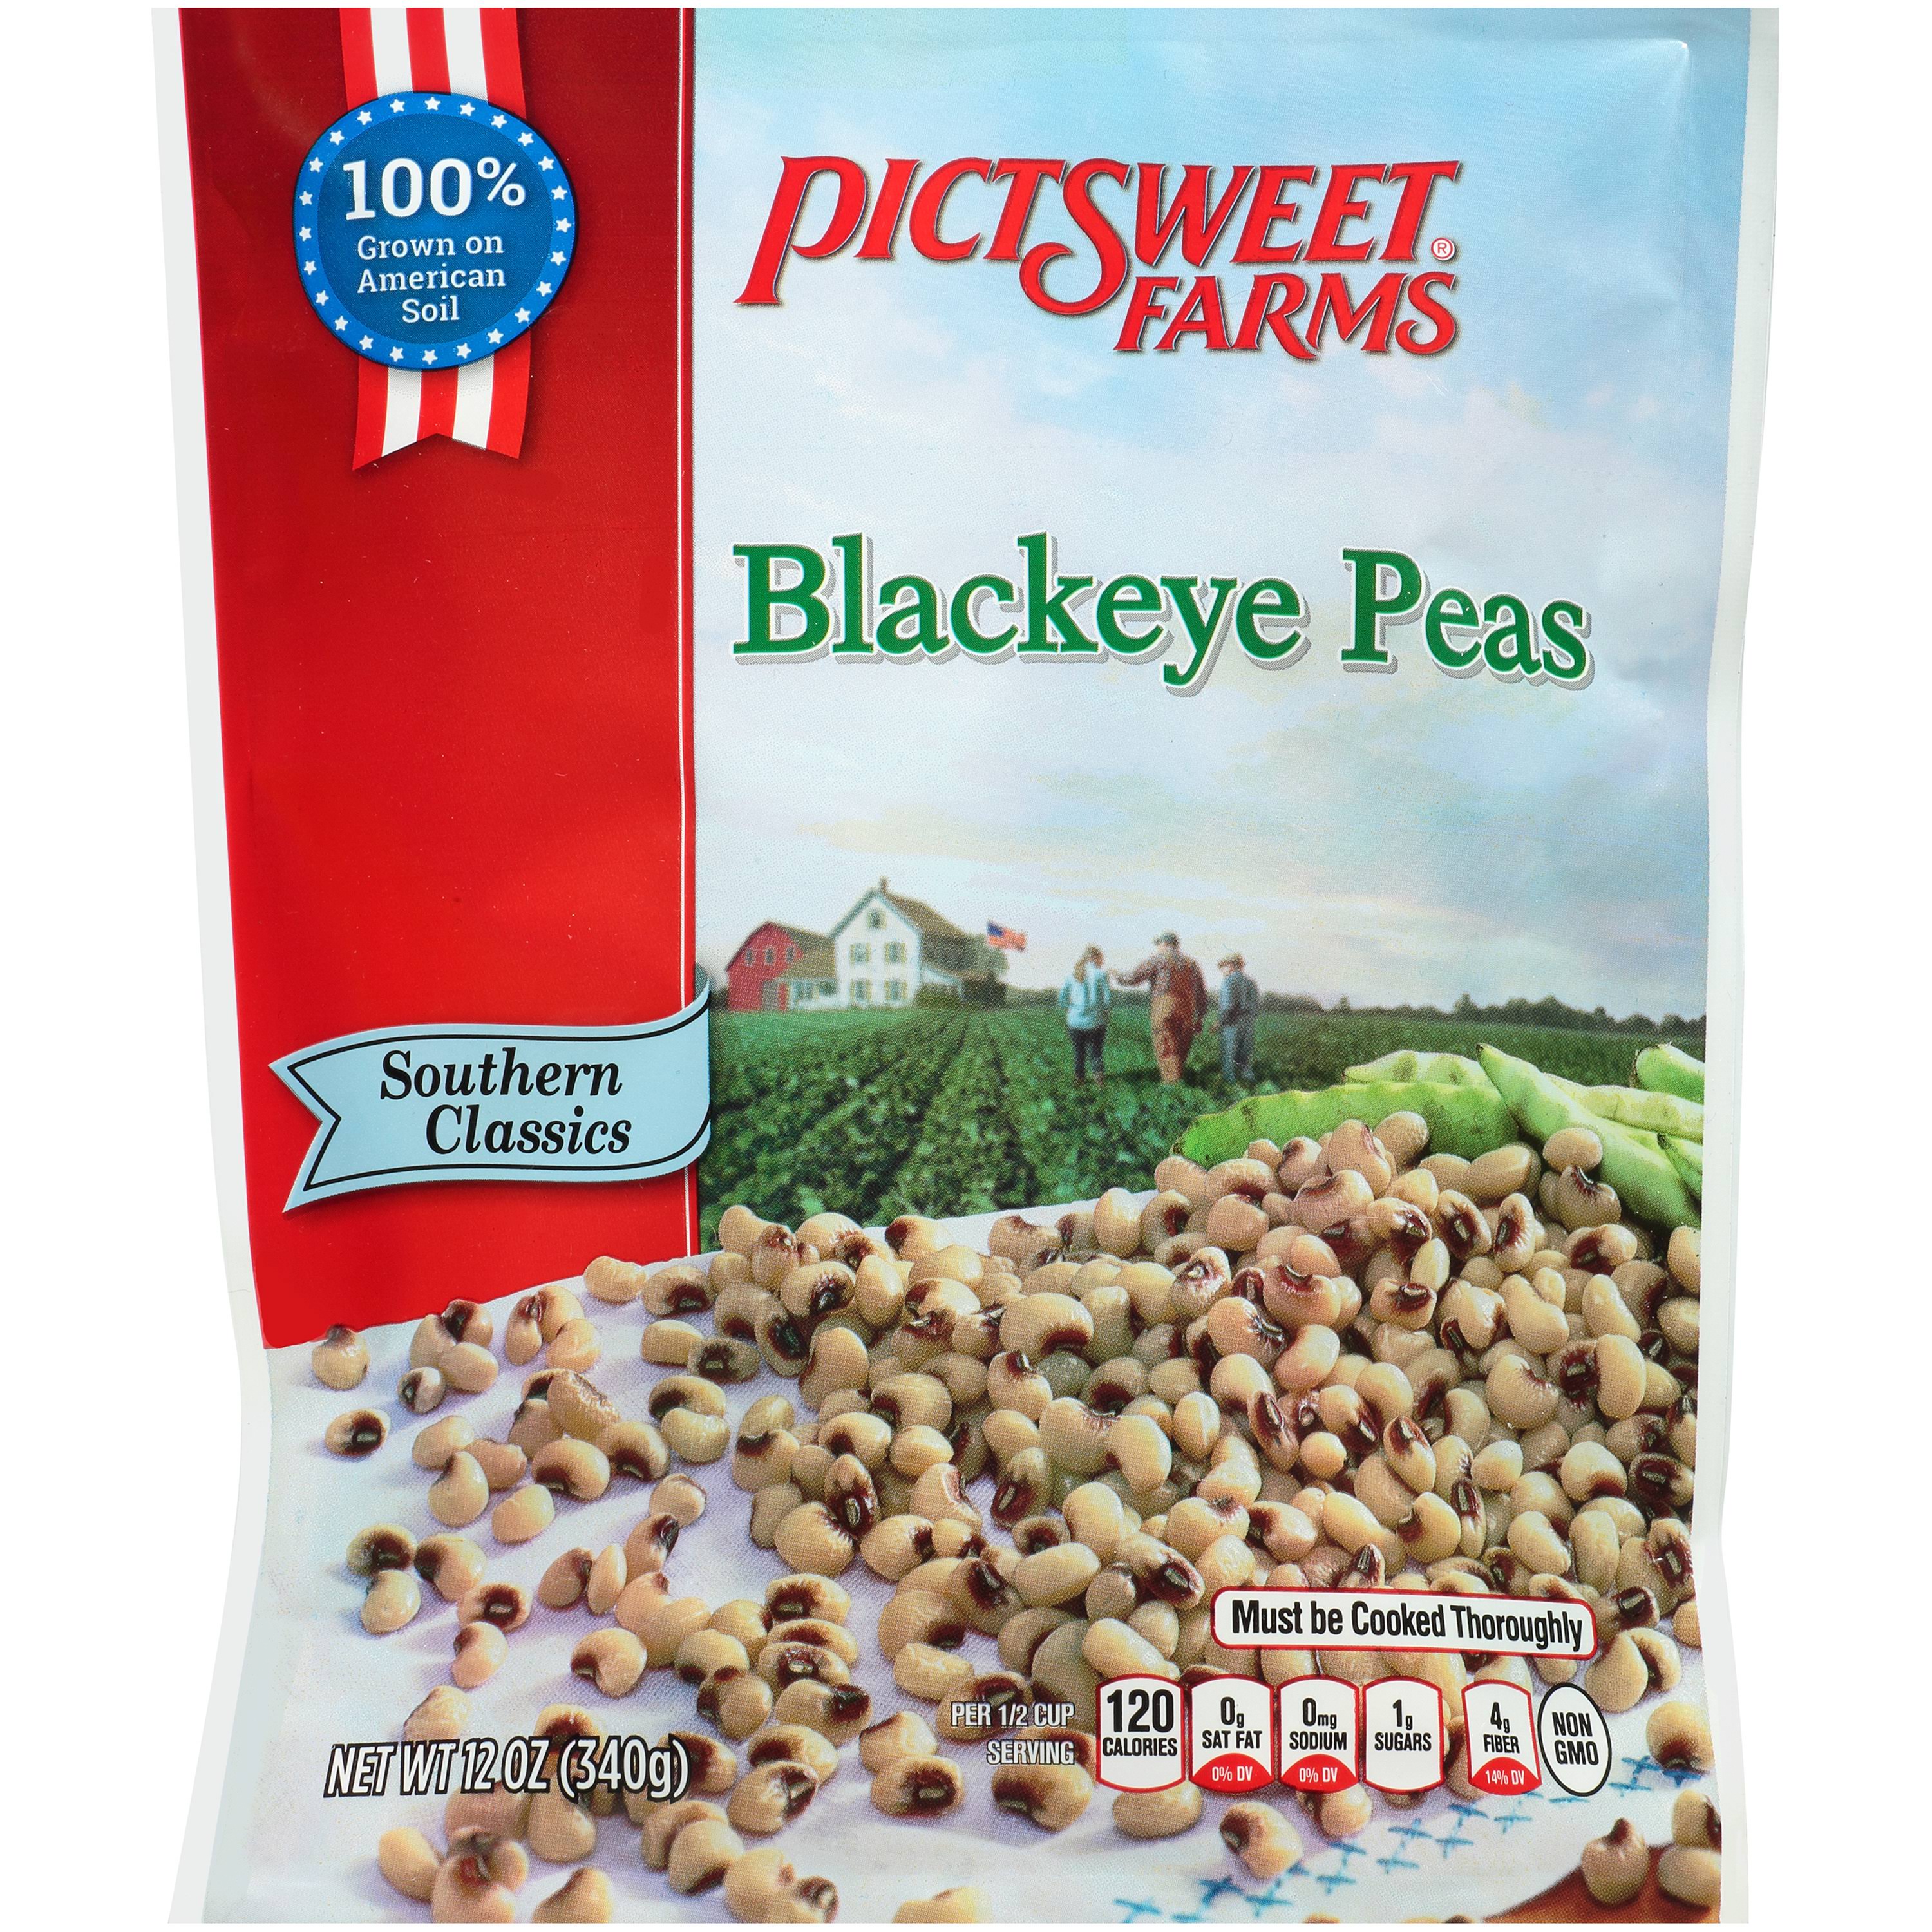 Pictsweet Farms Southern Classics Blackeye Peas - 12oz